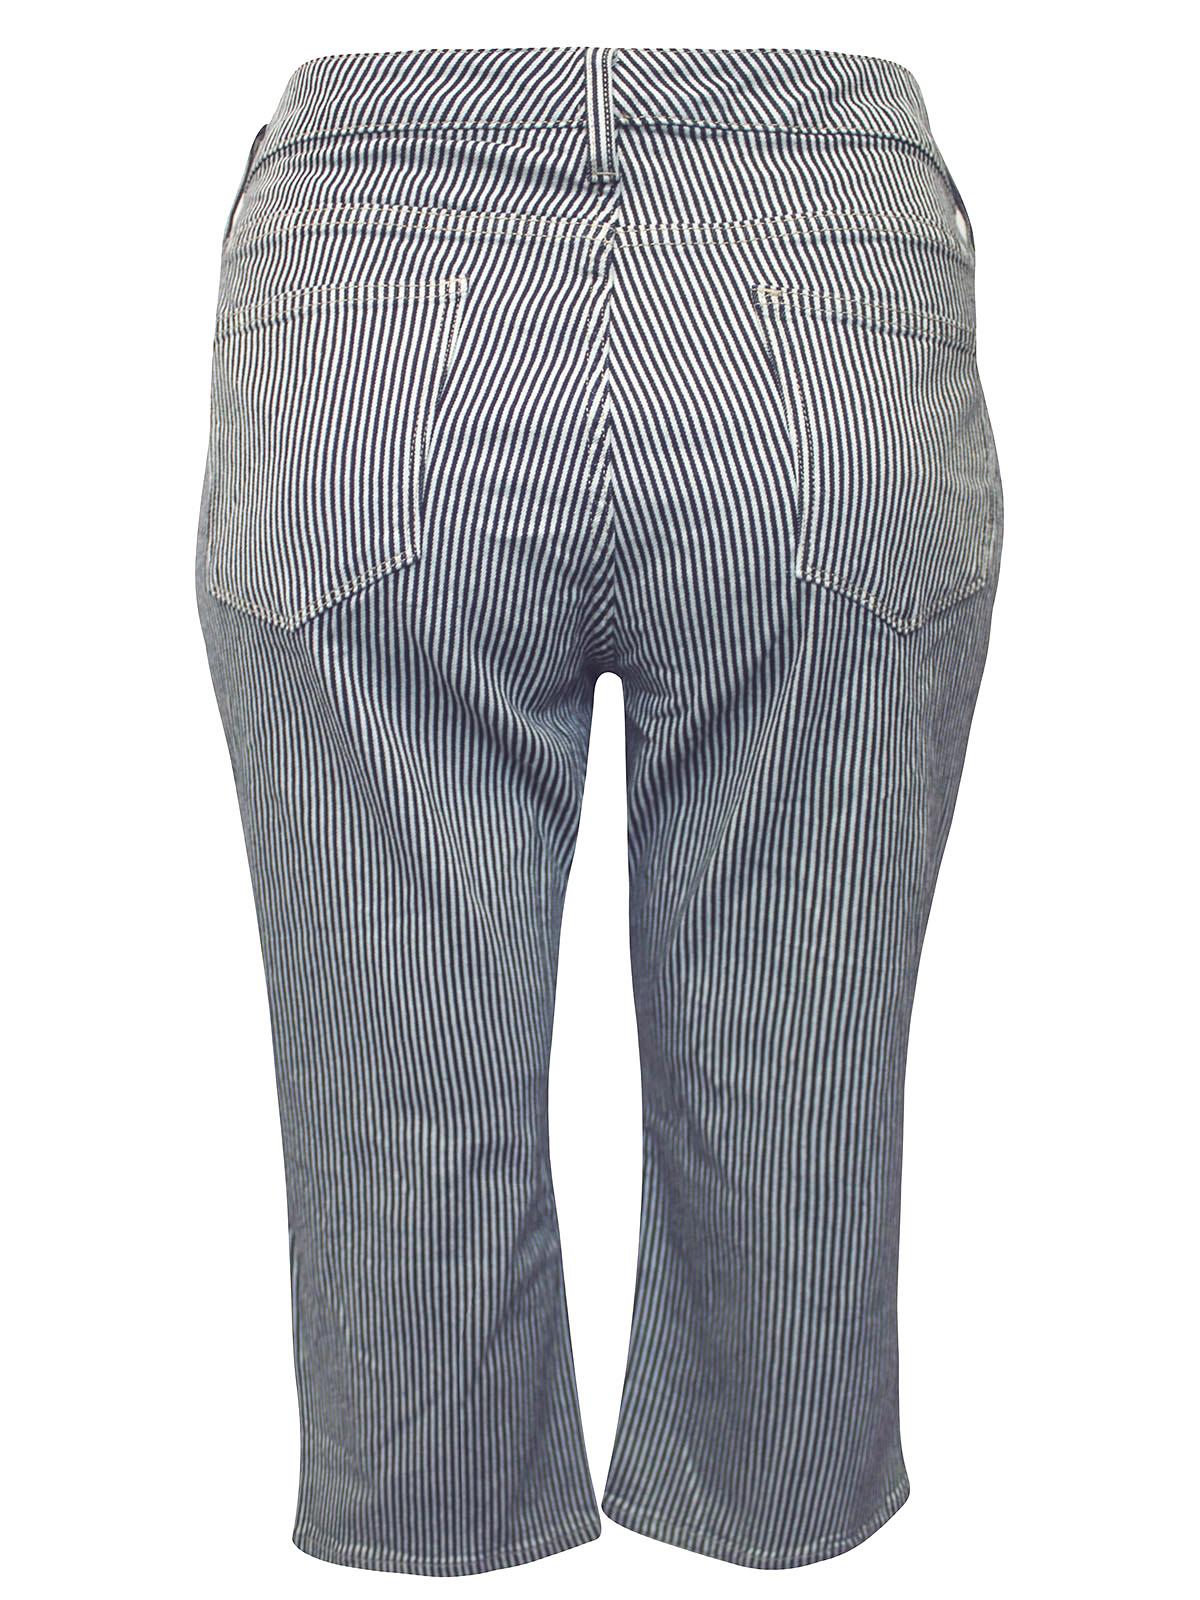 Women's Capri Jeans Cropped Plus Size Black & White Stripe Summer Trousers 18-26